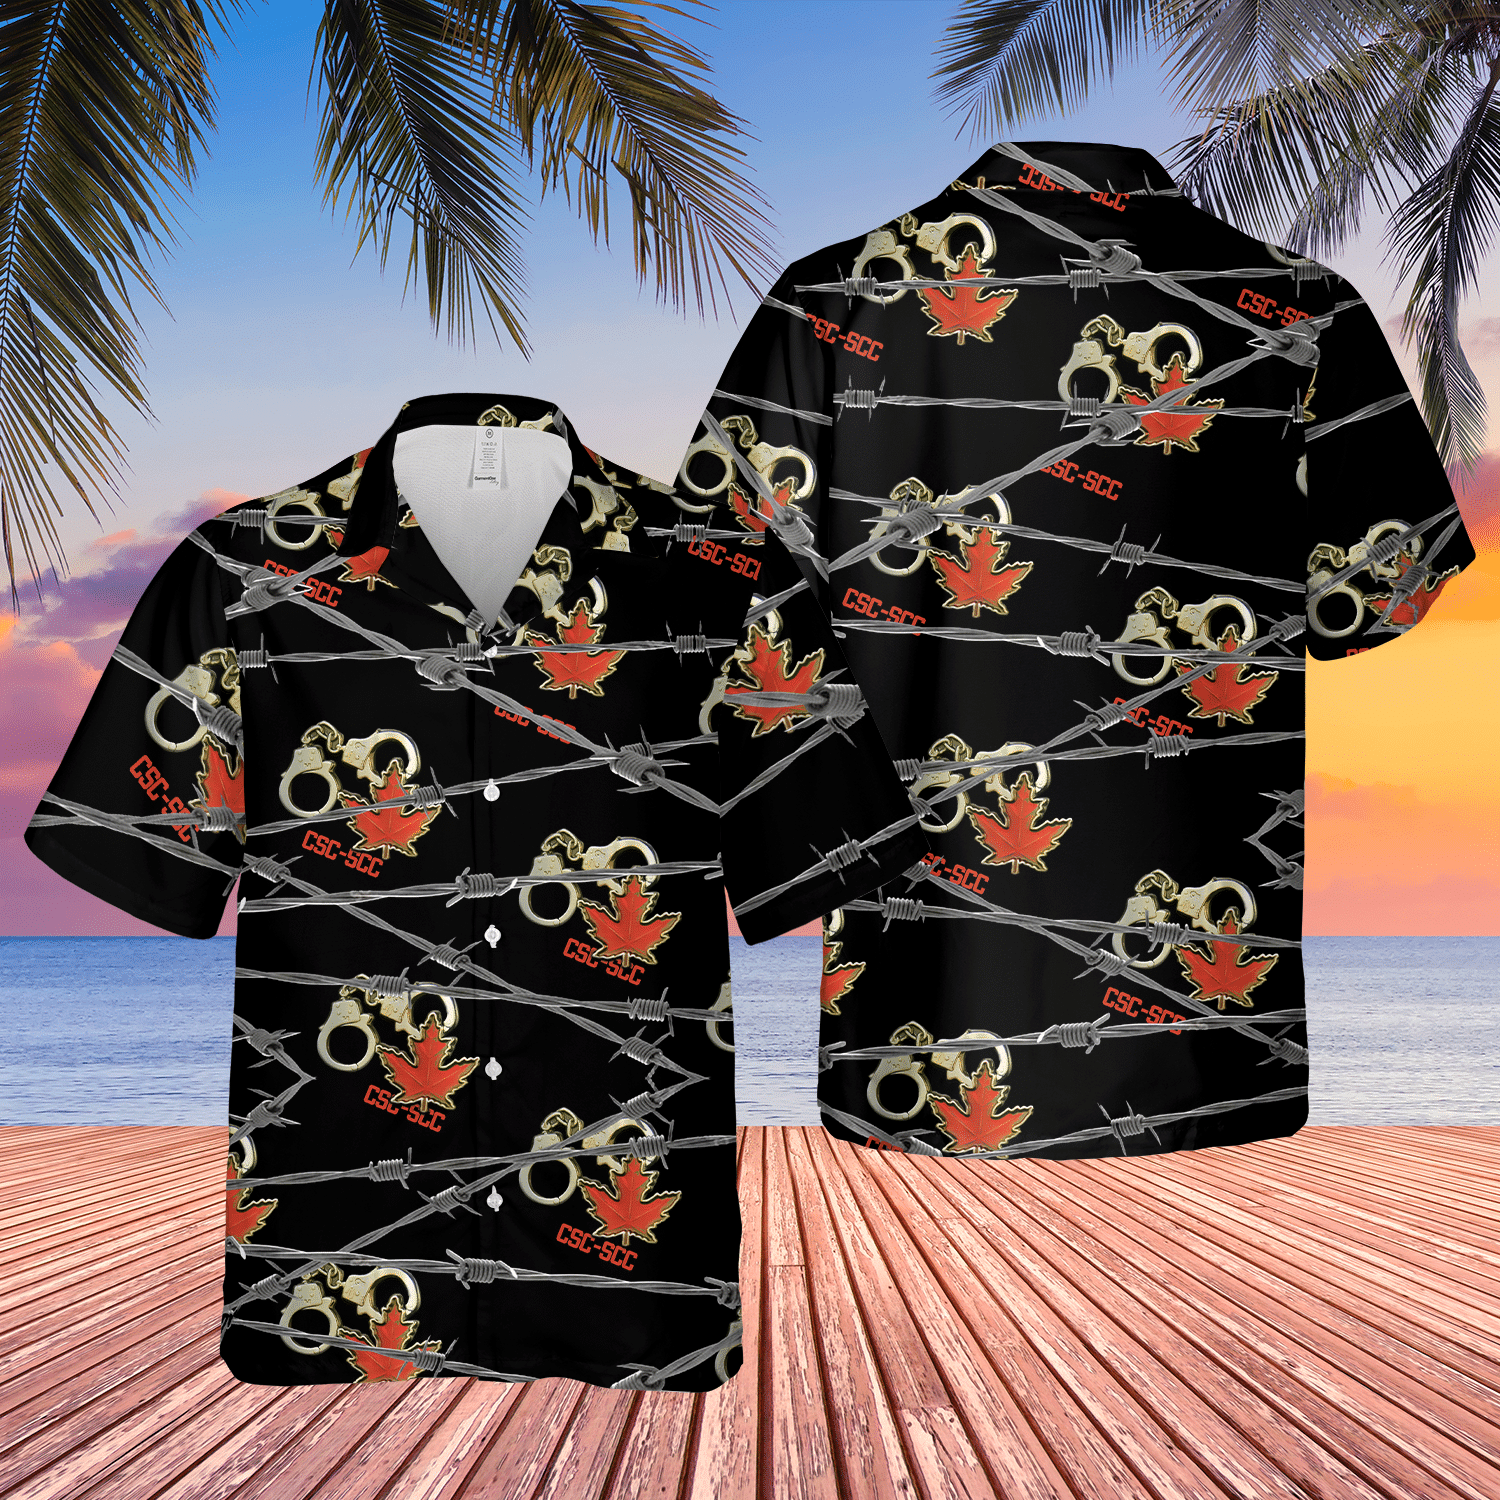 Enjoy your summer with top cool hawaiian shirt below 95